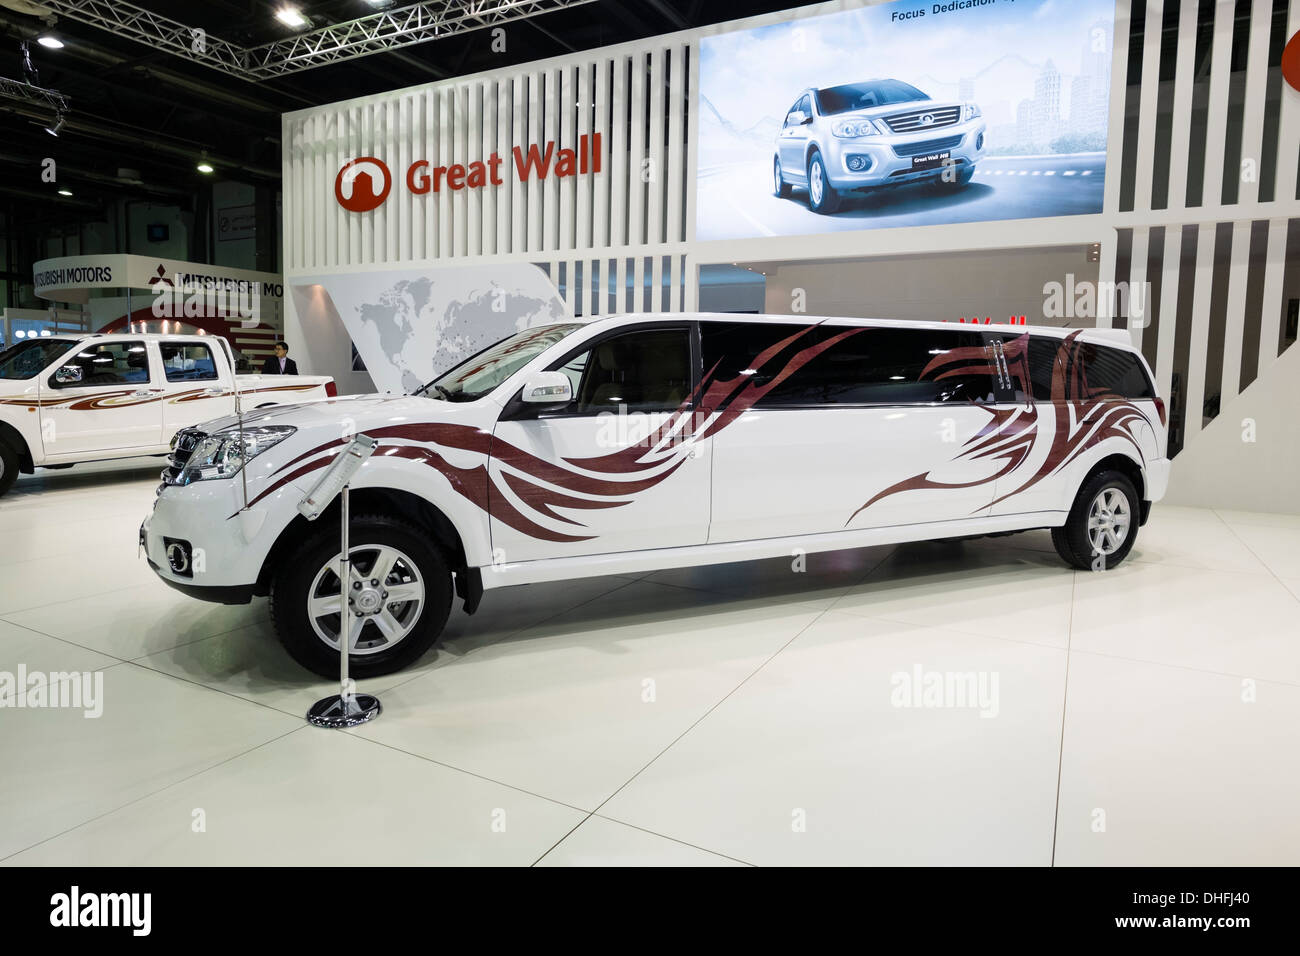 Fabricada en China Great Wall autos en exhibición en el Dubai Motor Show 2013 Emiratos Arabes Unidos Foto de stock